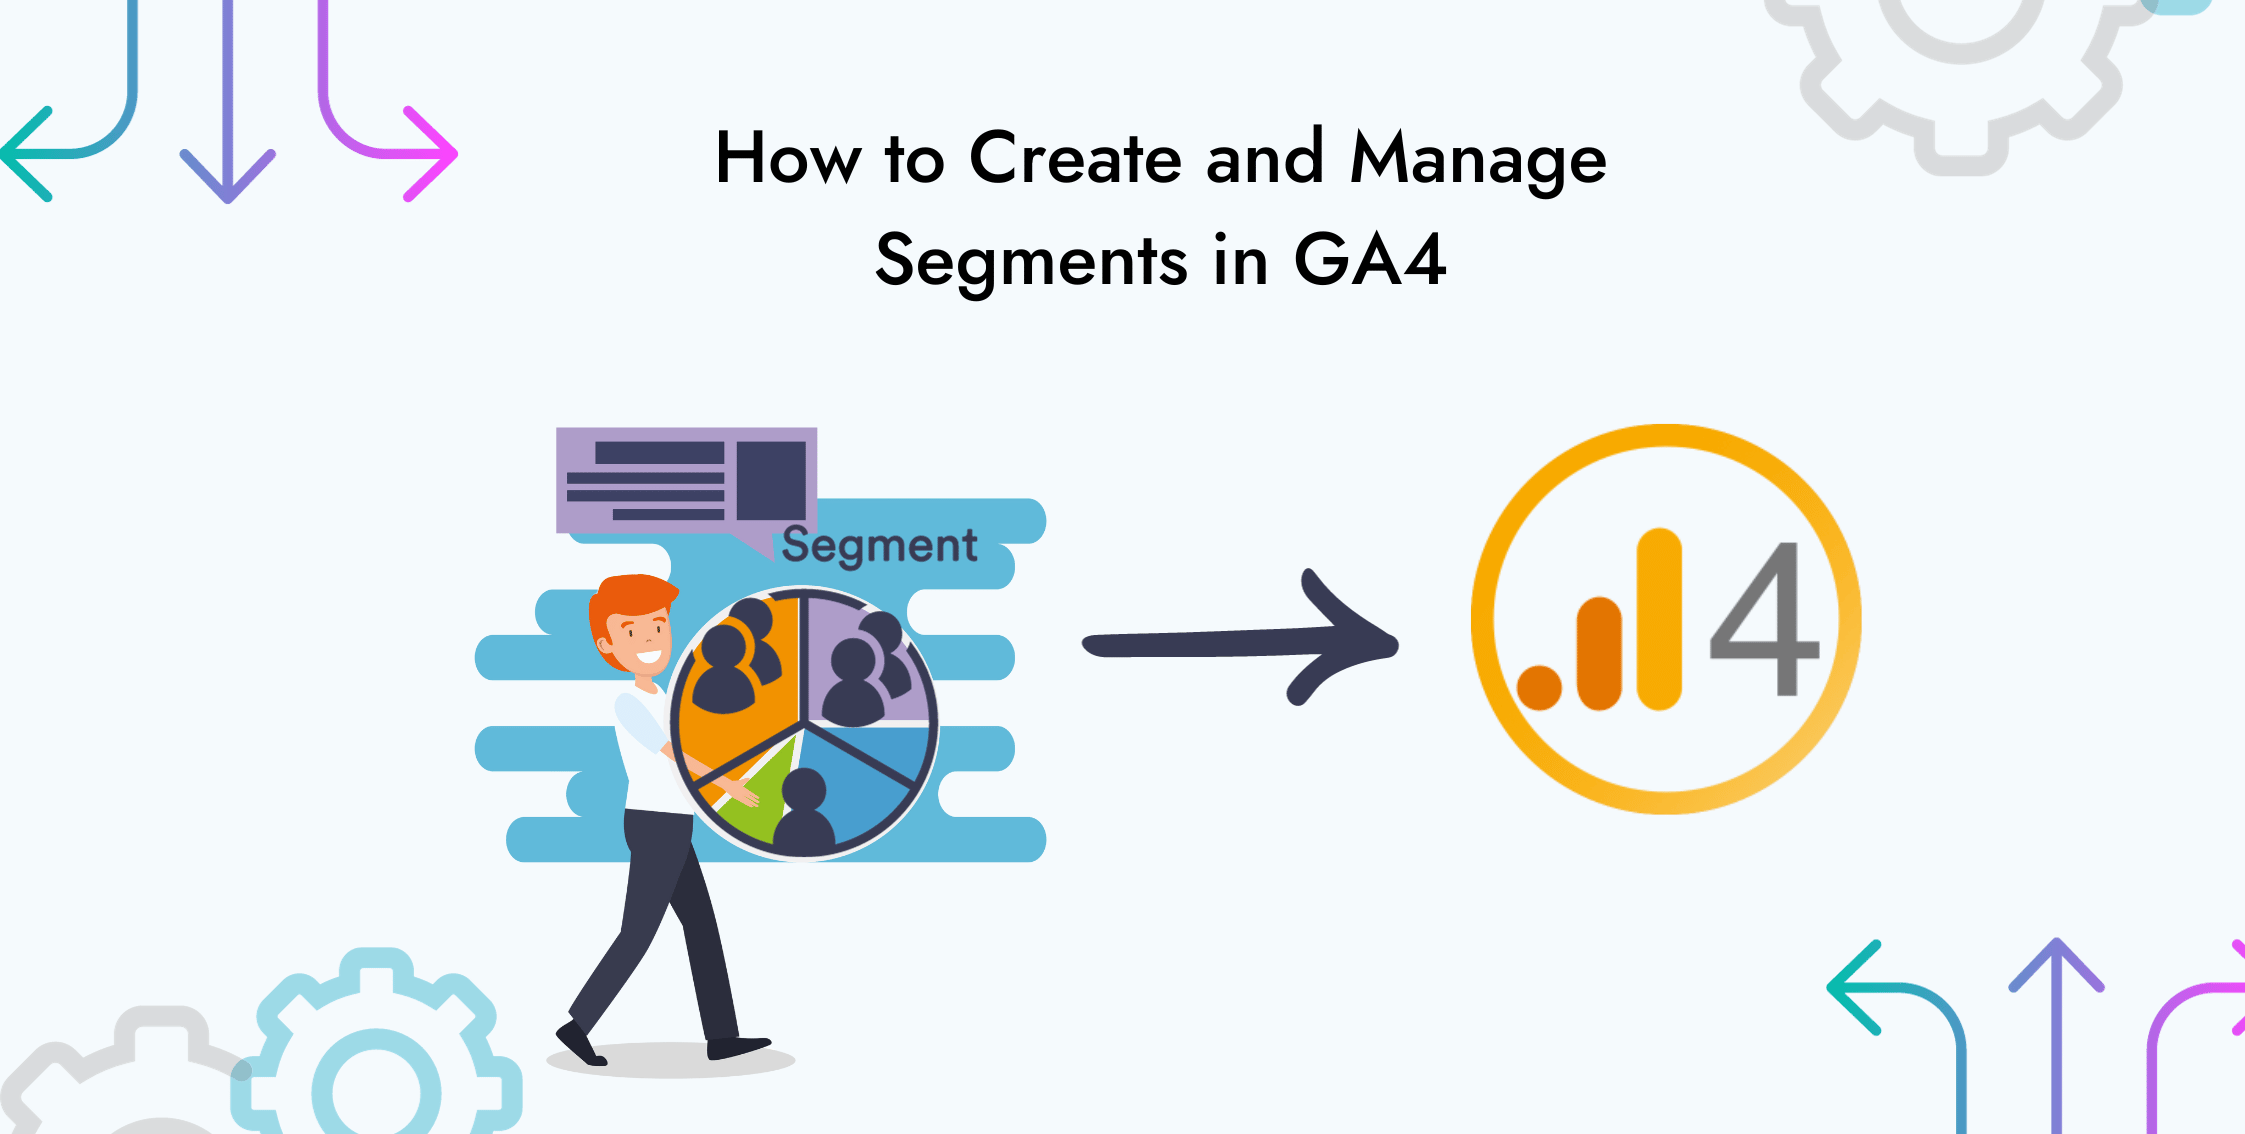 How to Create and Manage GA4 Segments